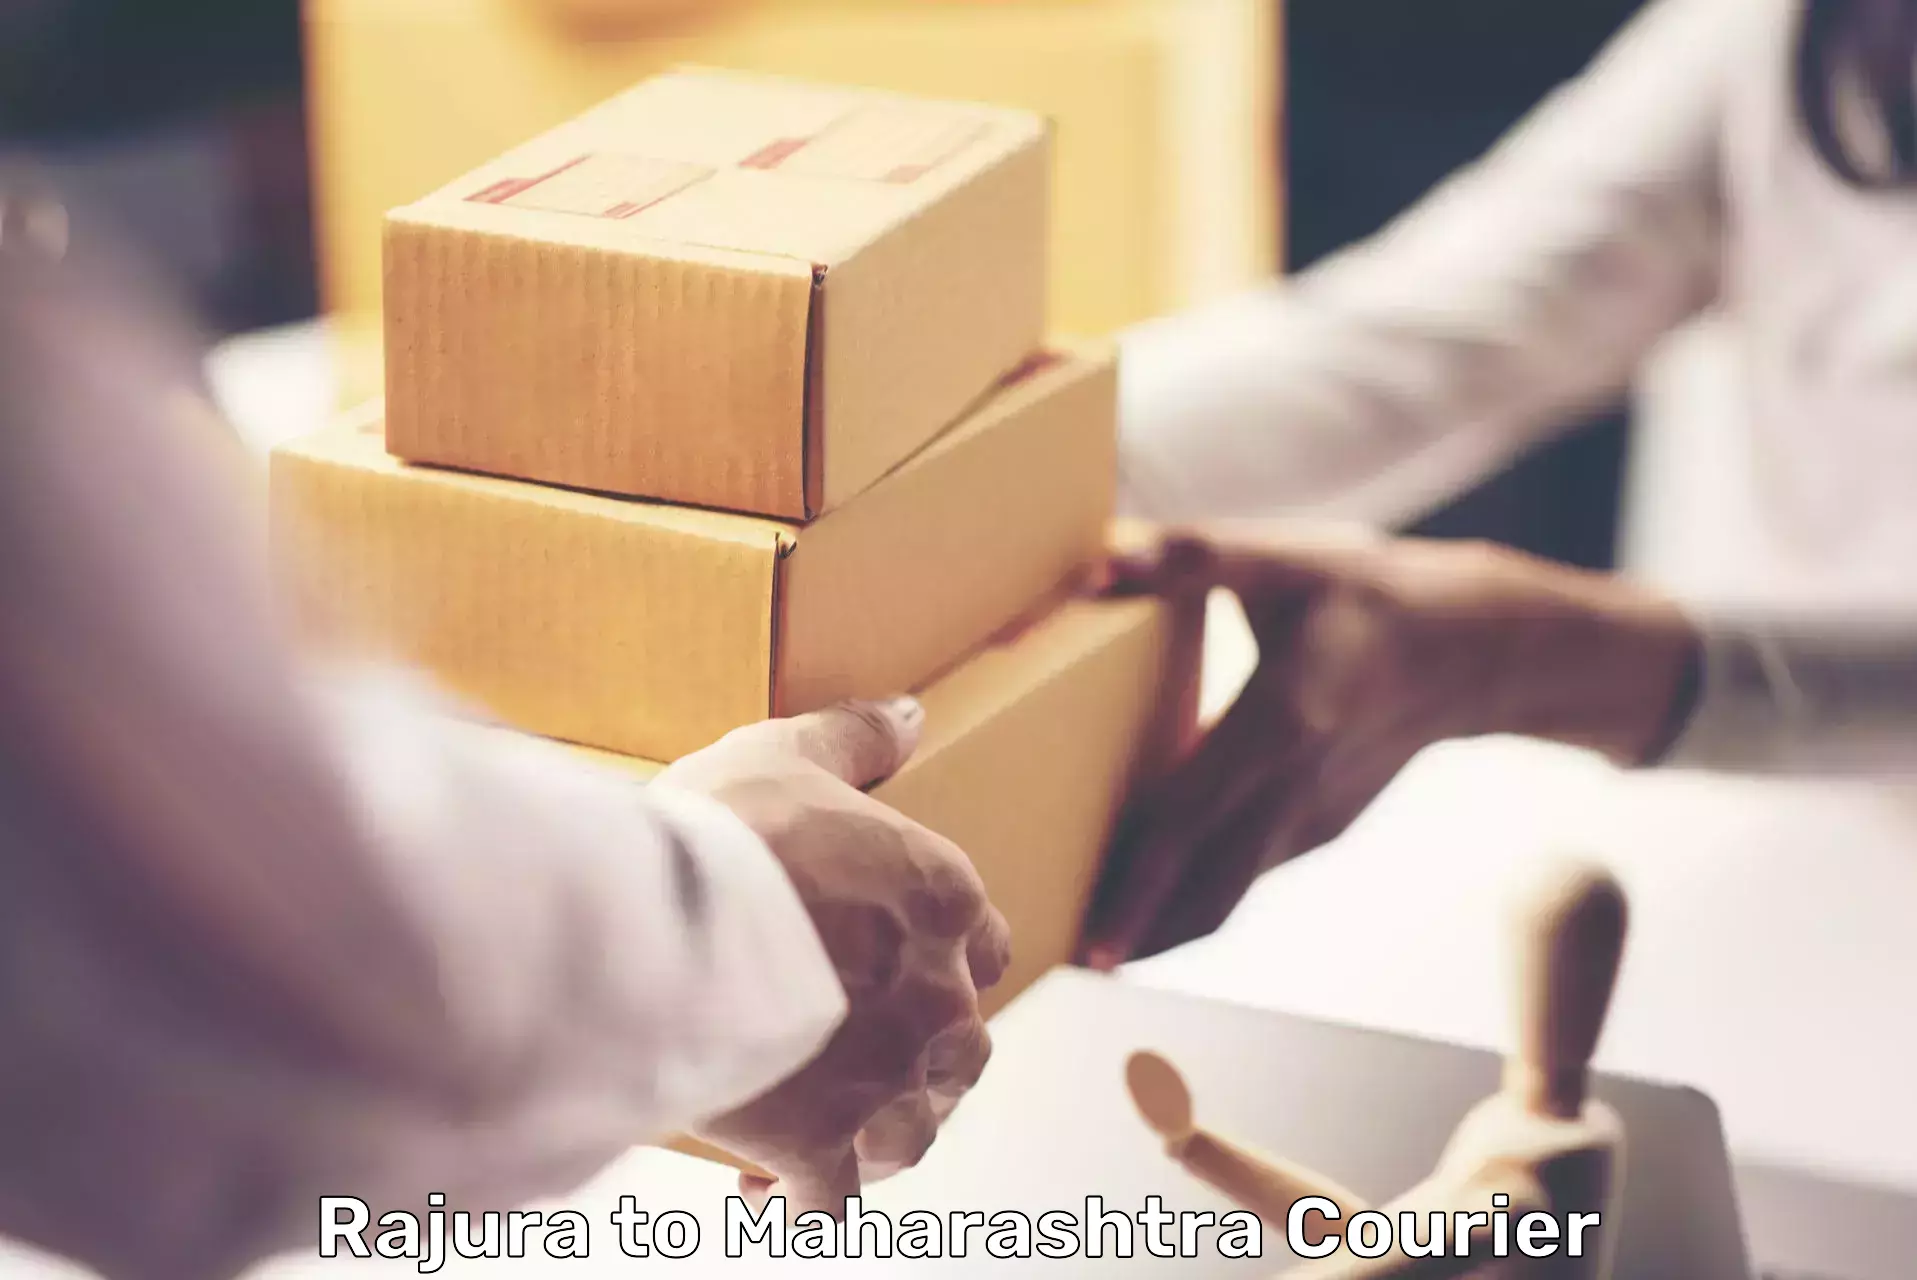 Courier service innovation Rajura to Thane